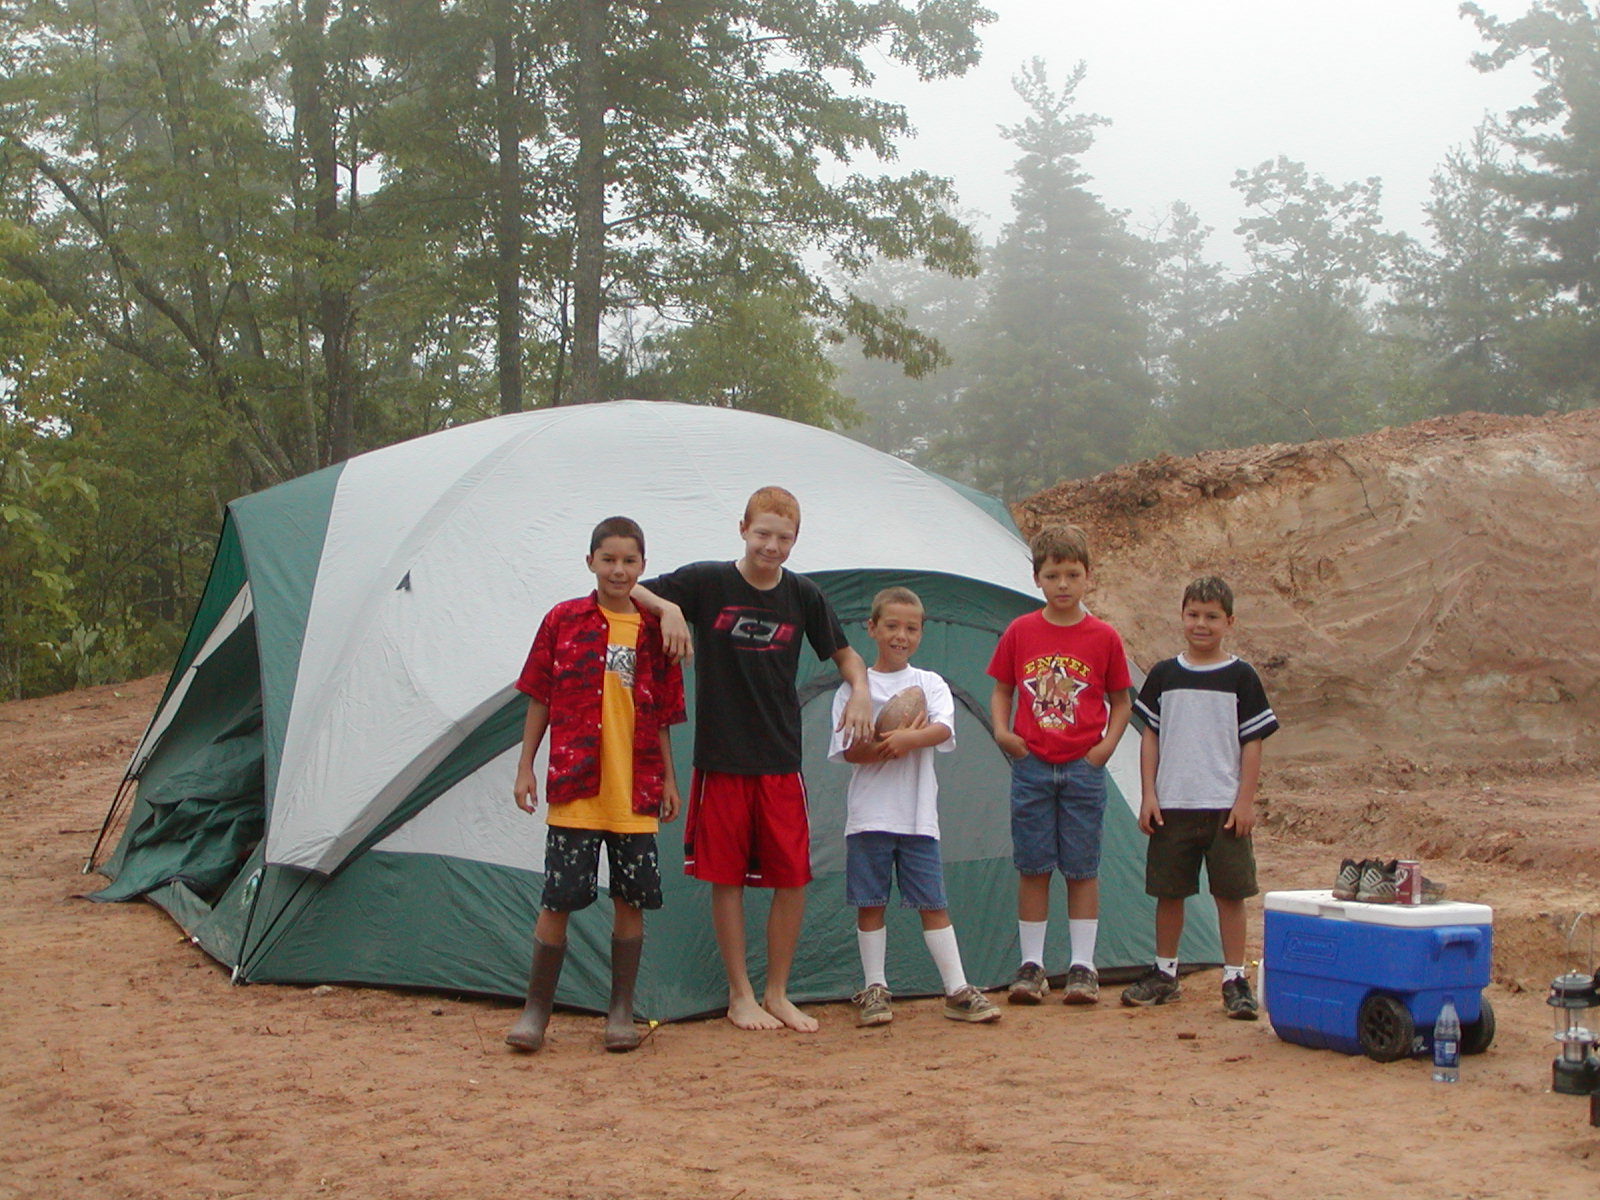 Ian, Brandan, Dustin, Austin And Josh At Our Camping Site